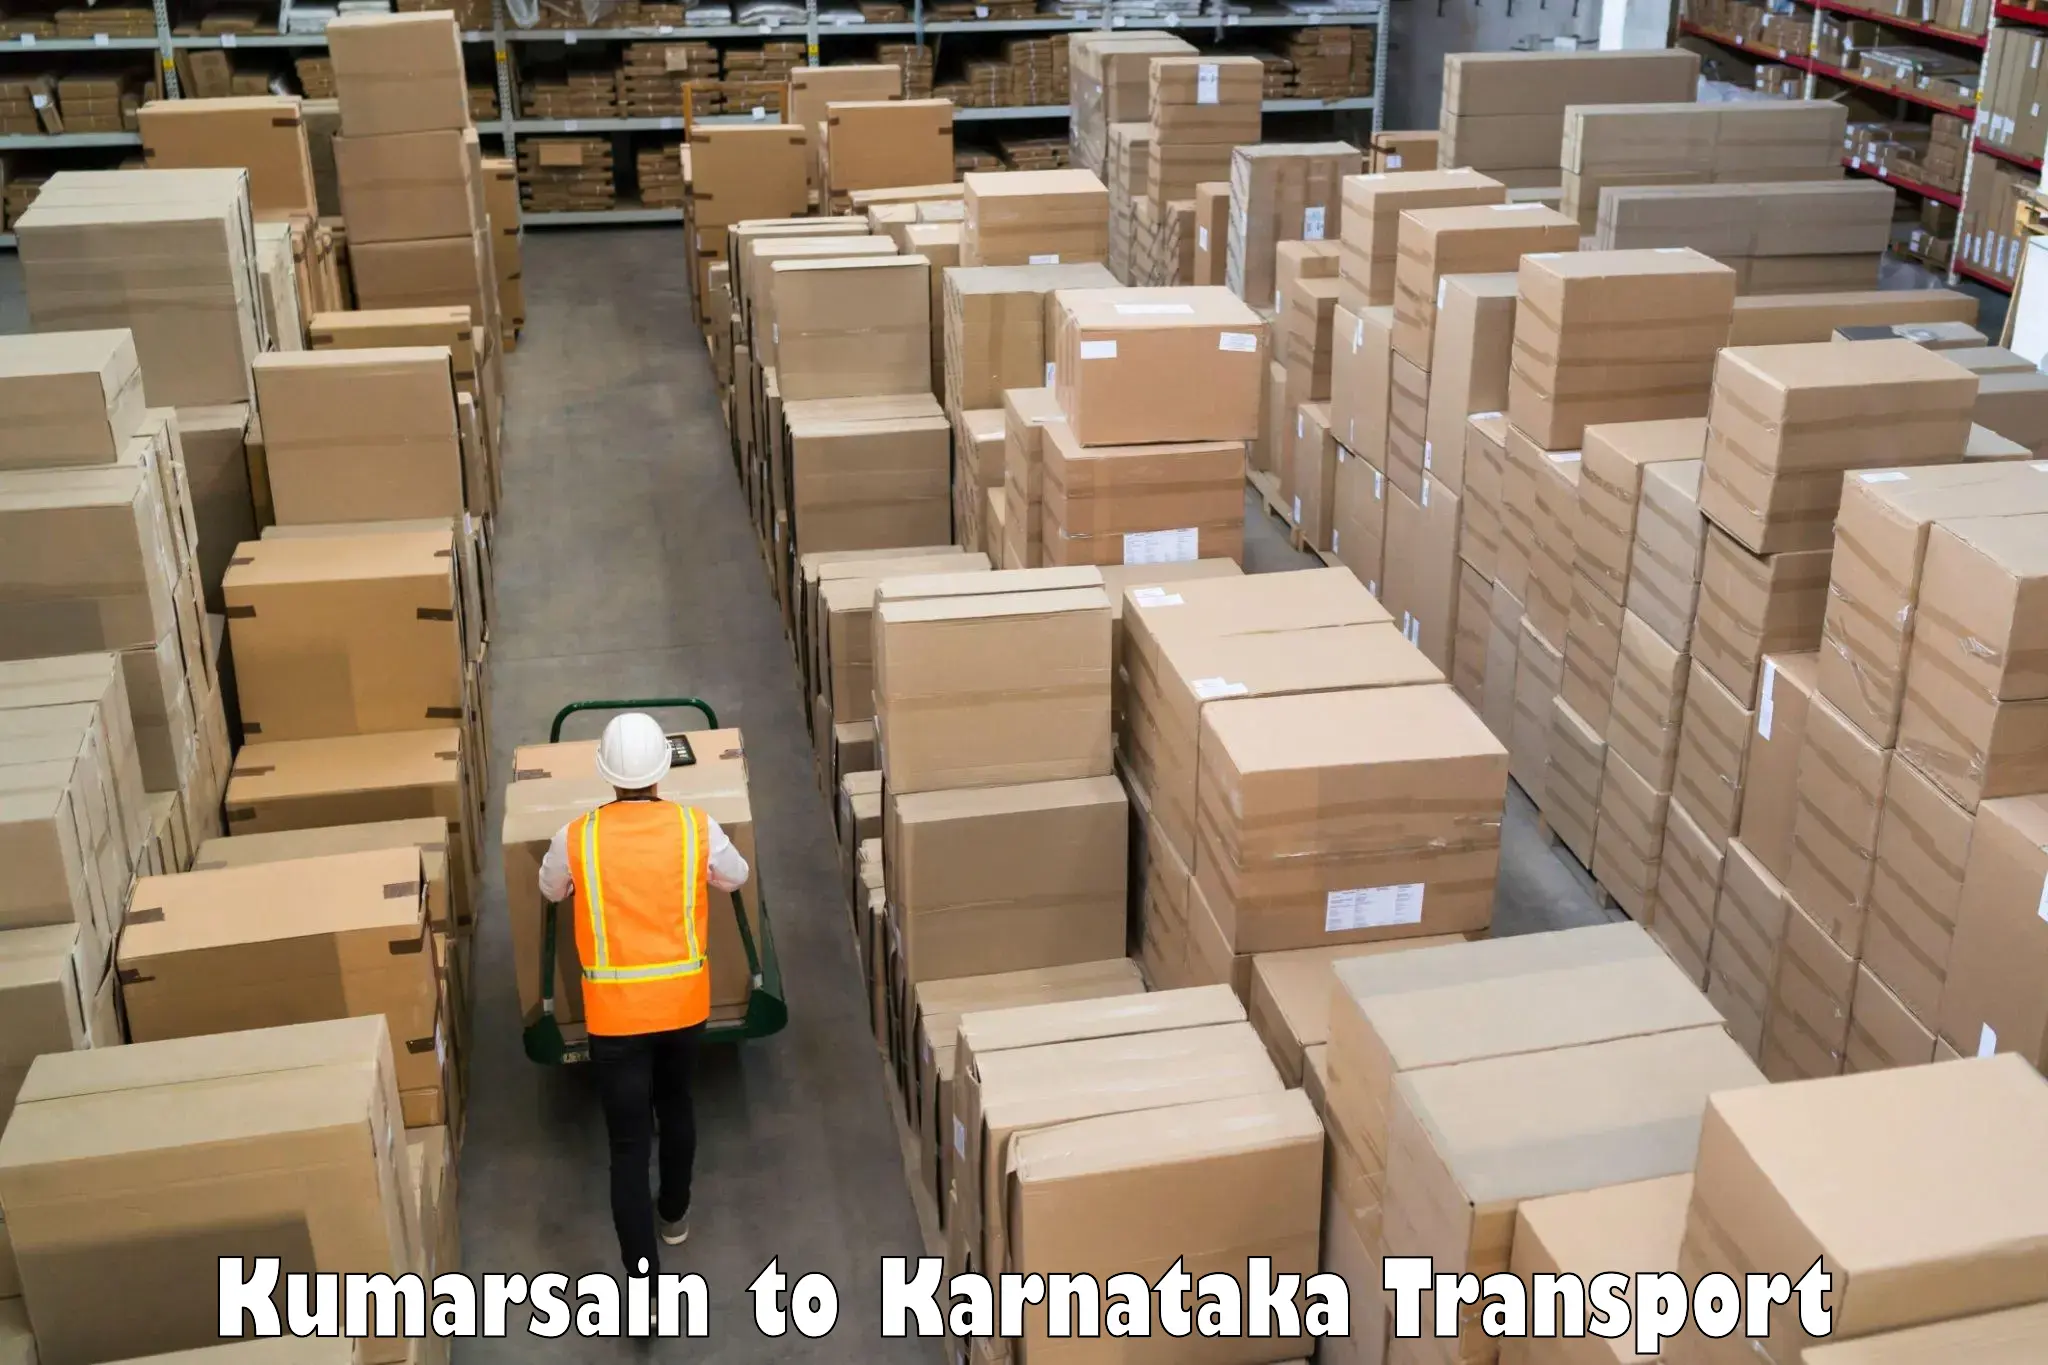 Parcel transport services Kumarsain to Bangalore